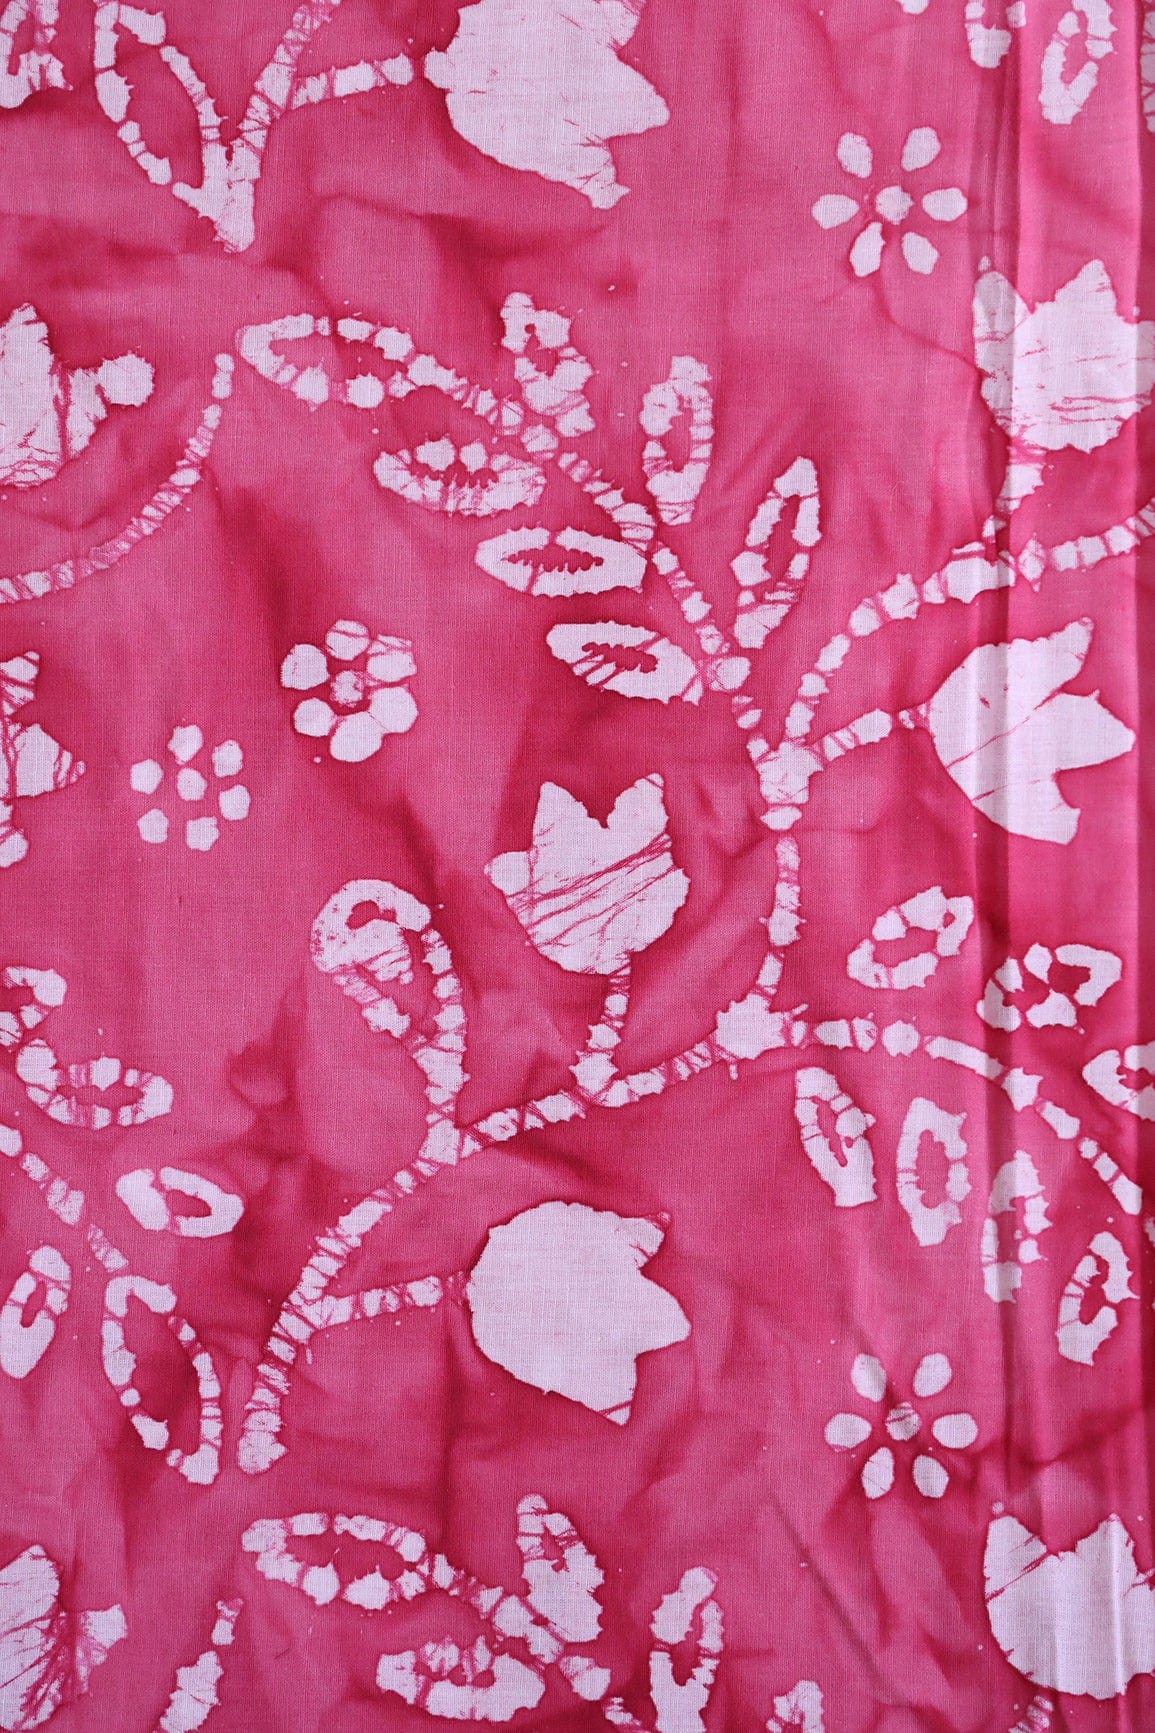 doeraa Prints White And Dark Pink Floral Pattern Batik Handblock Organic Cotton Fabric